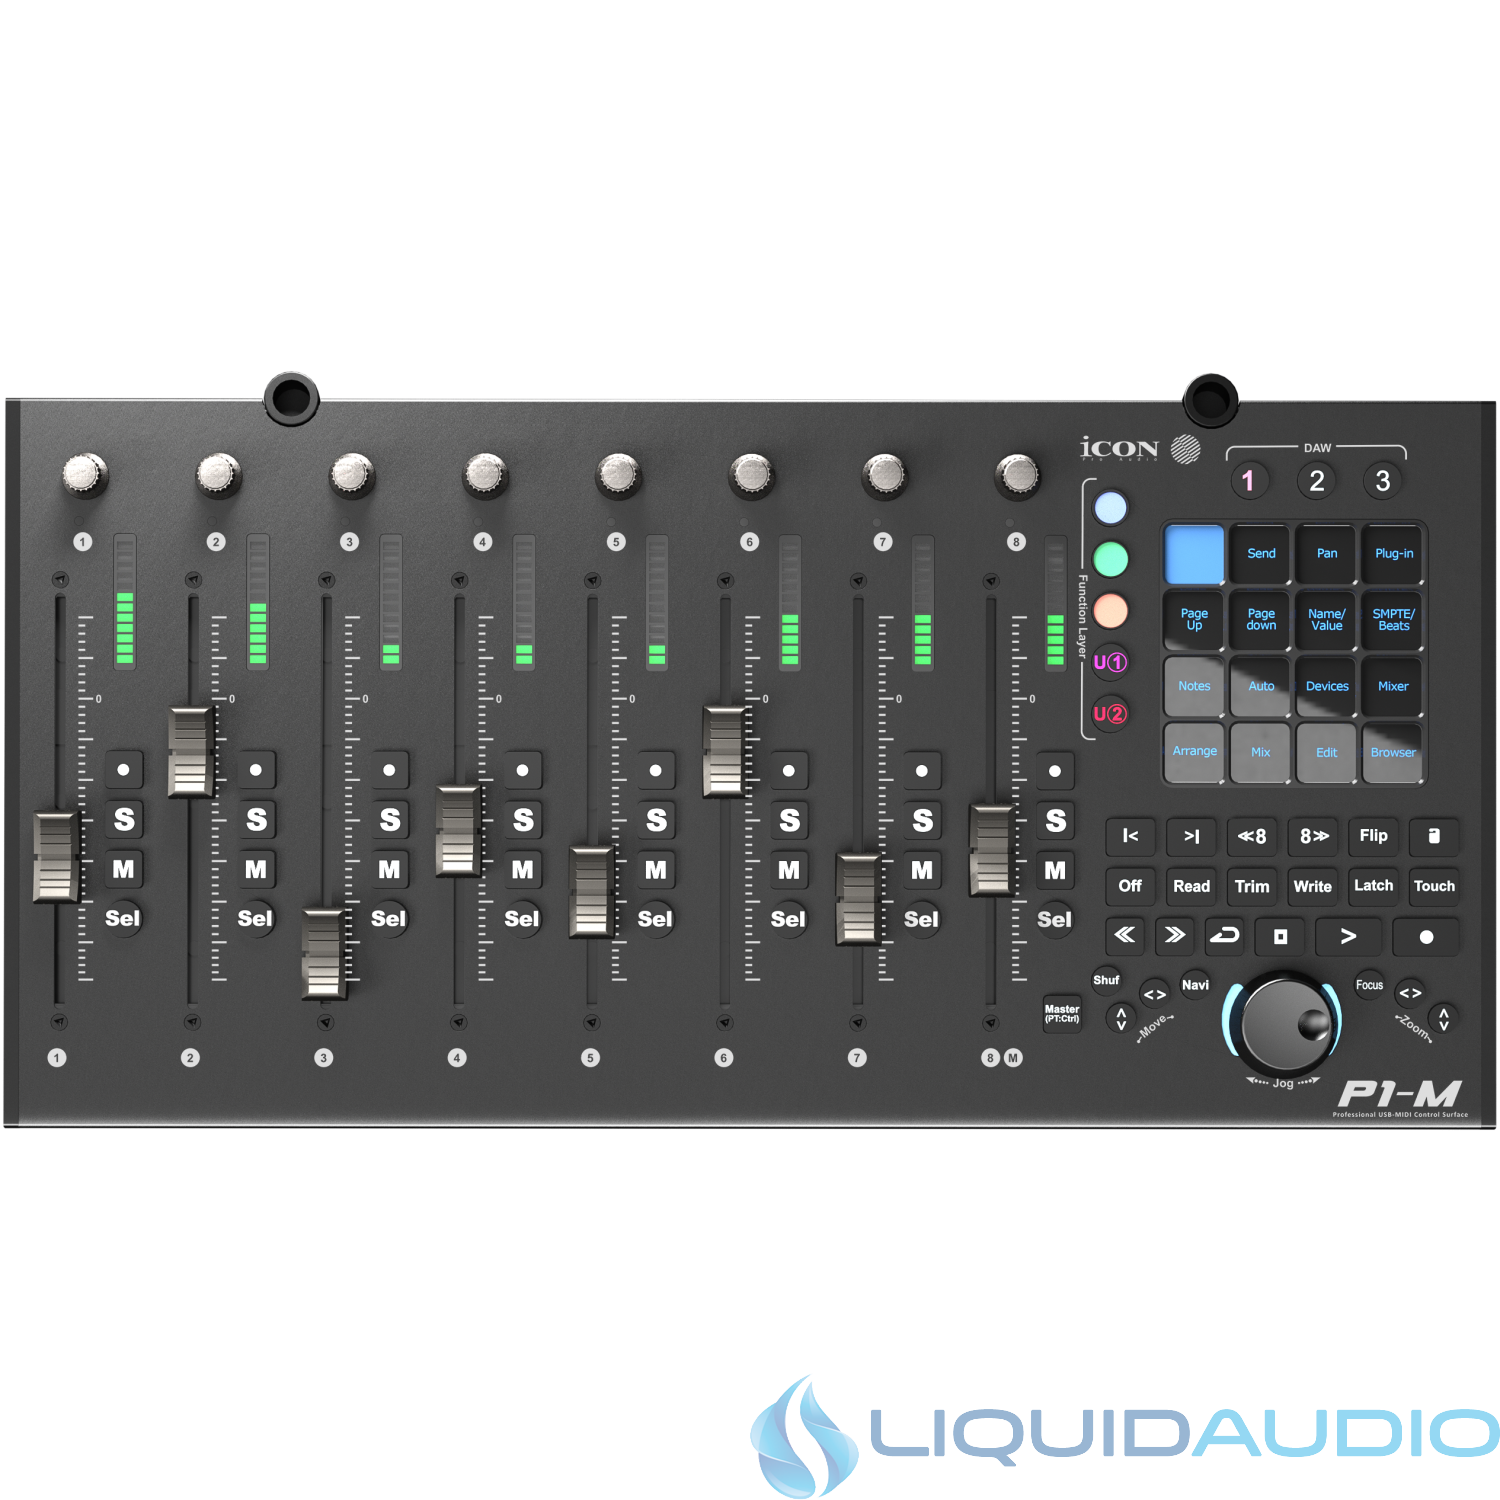 iCON Pro Audio P1-M DAW control surface w/ D4T display bundle 